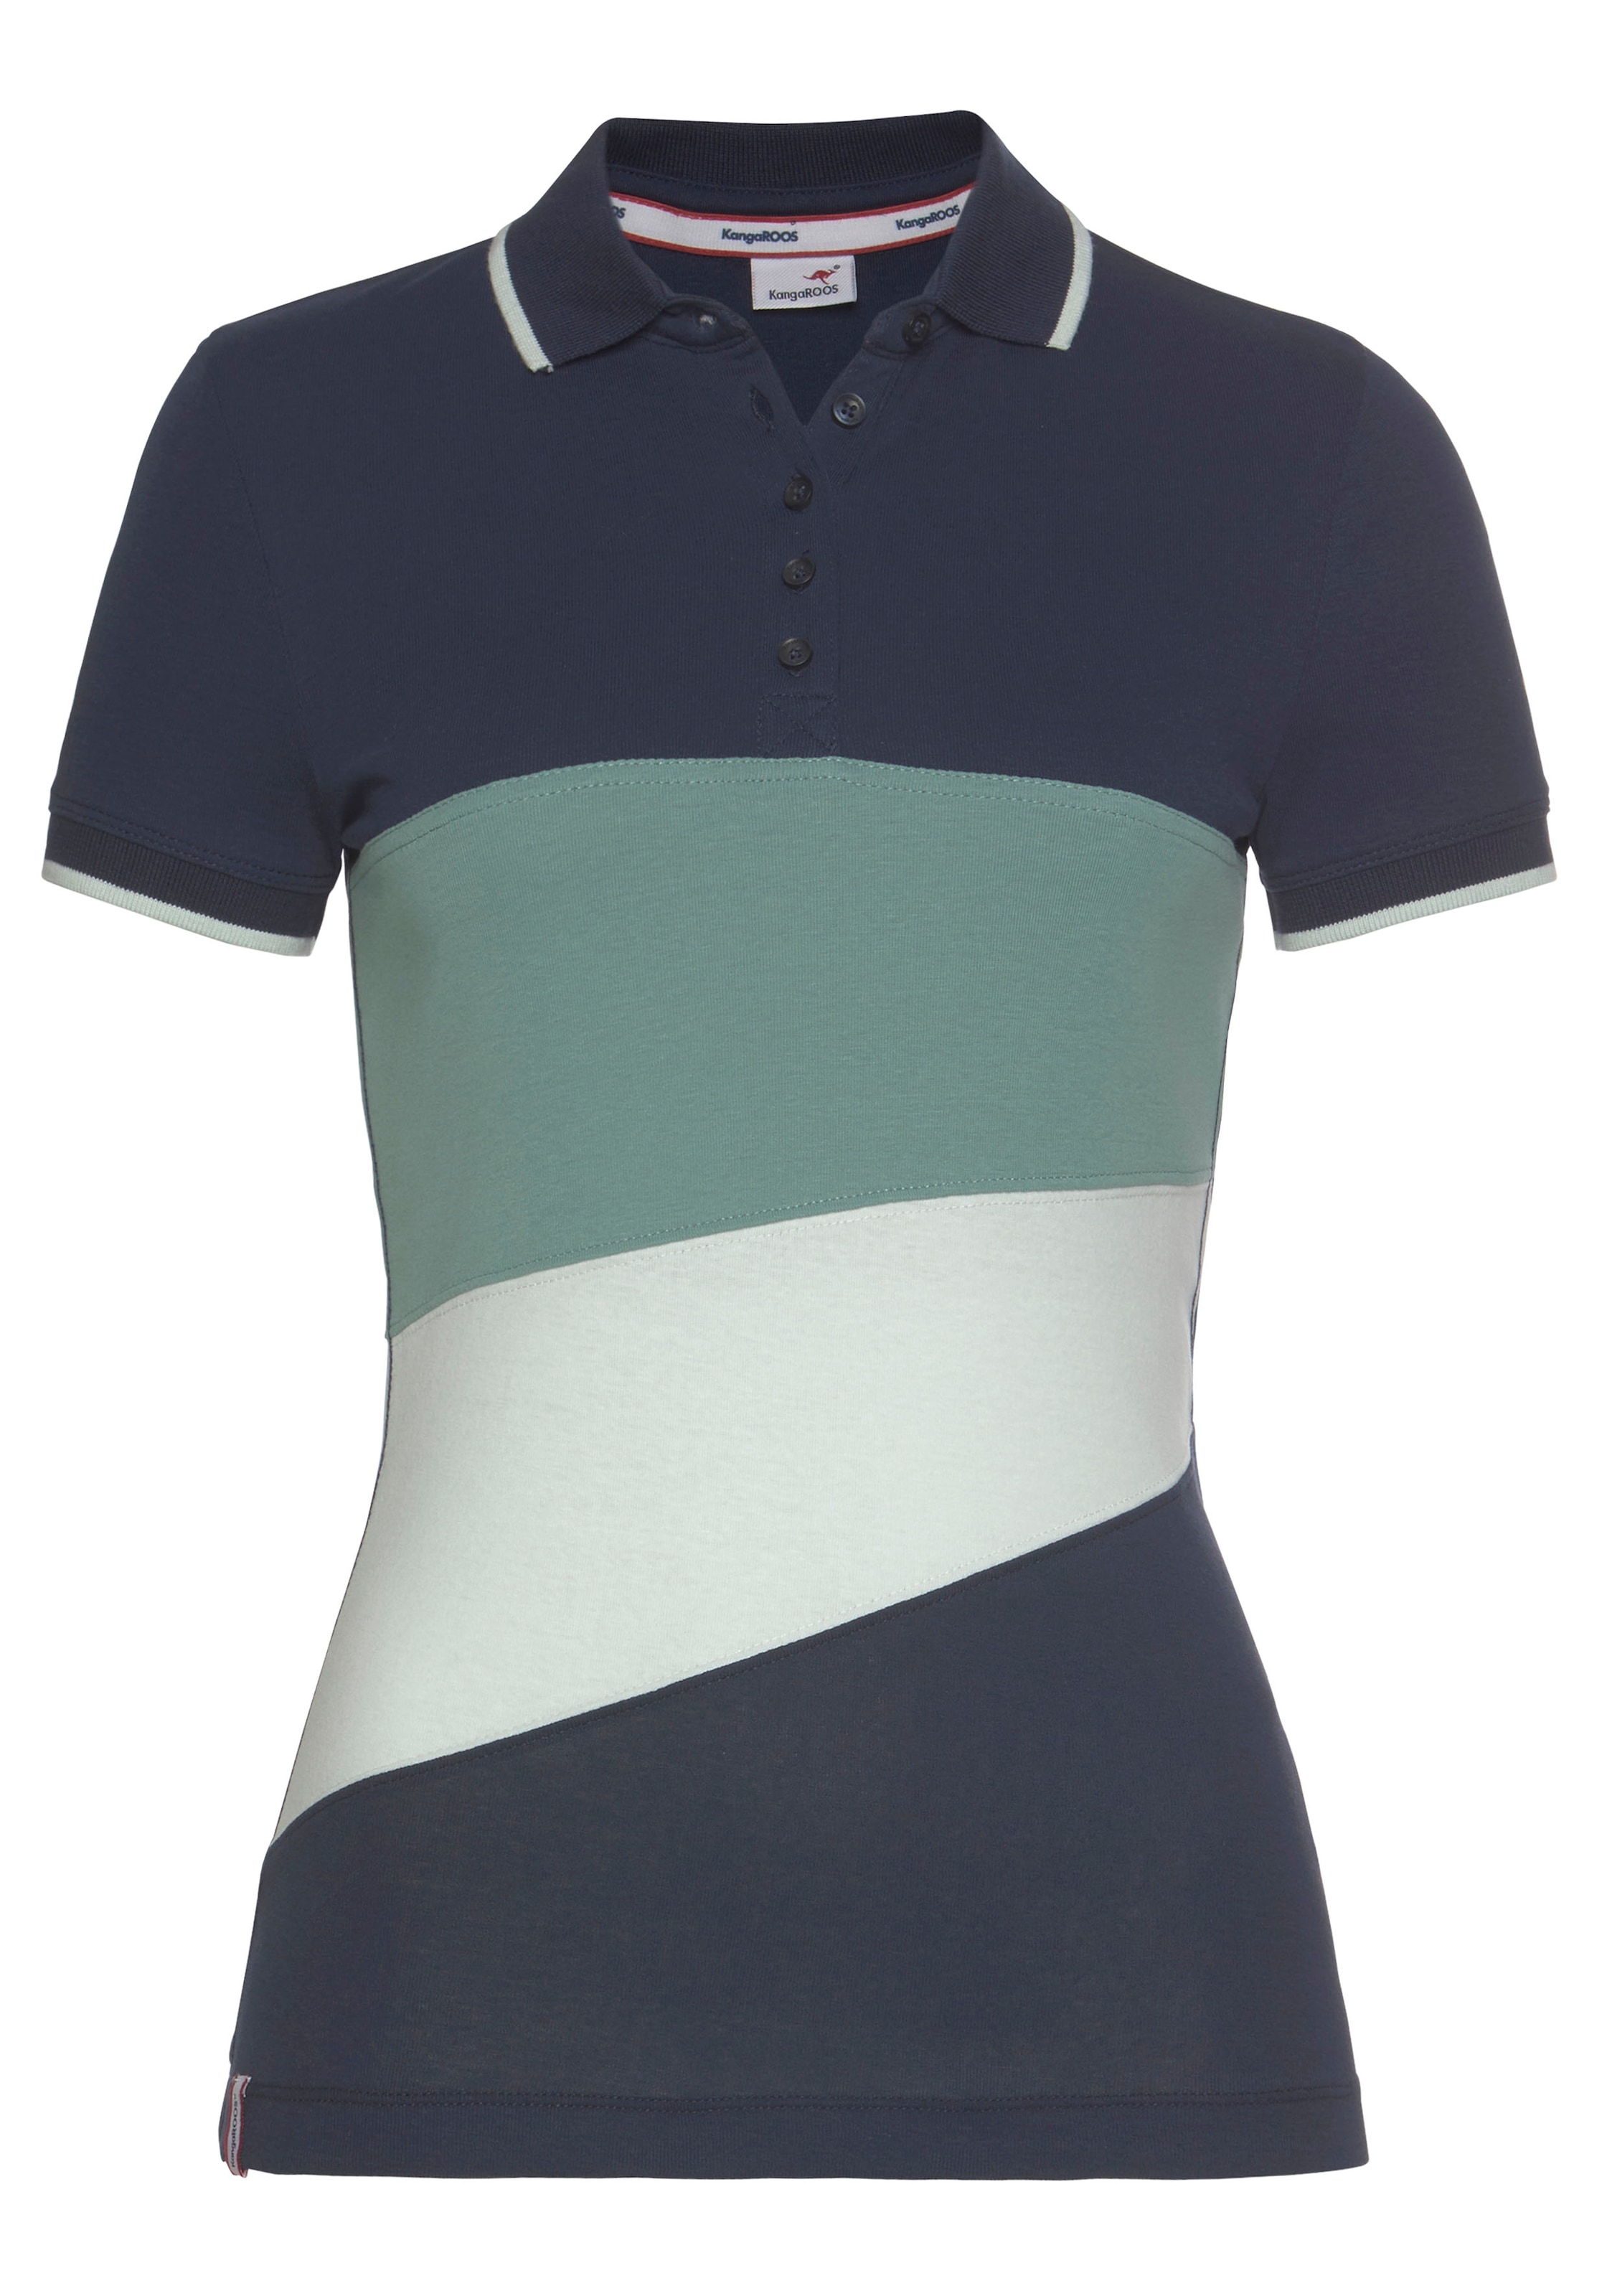 KangaROOS Poloshirt, mit Colorblocking im Online-Shop bestellen